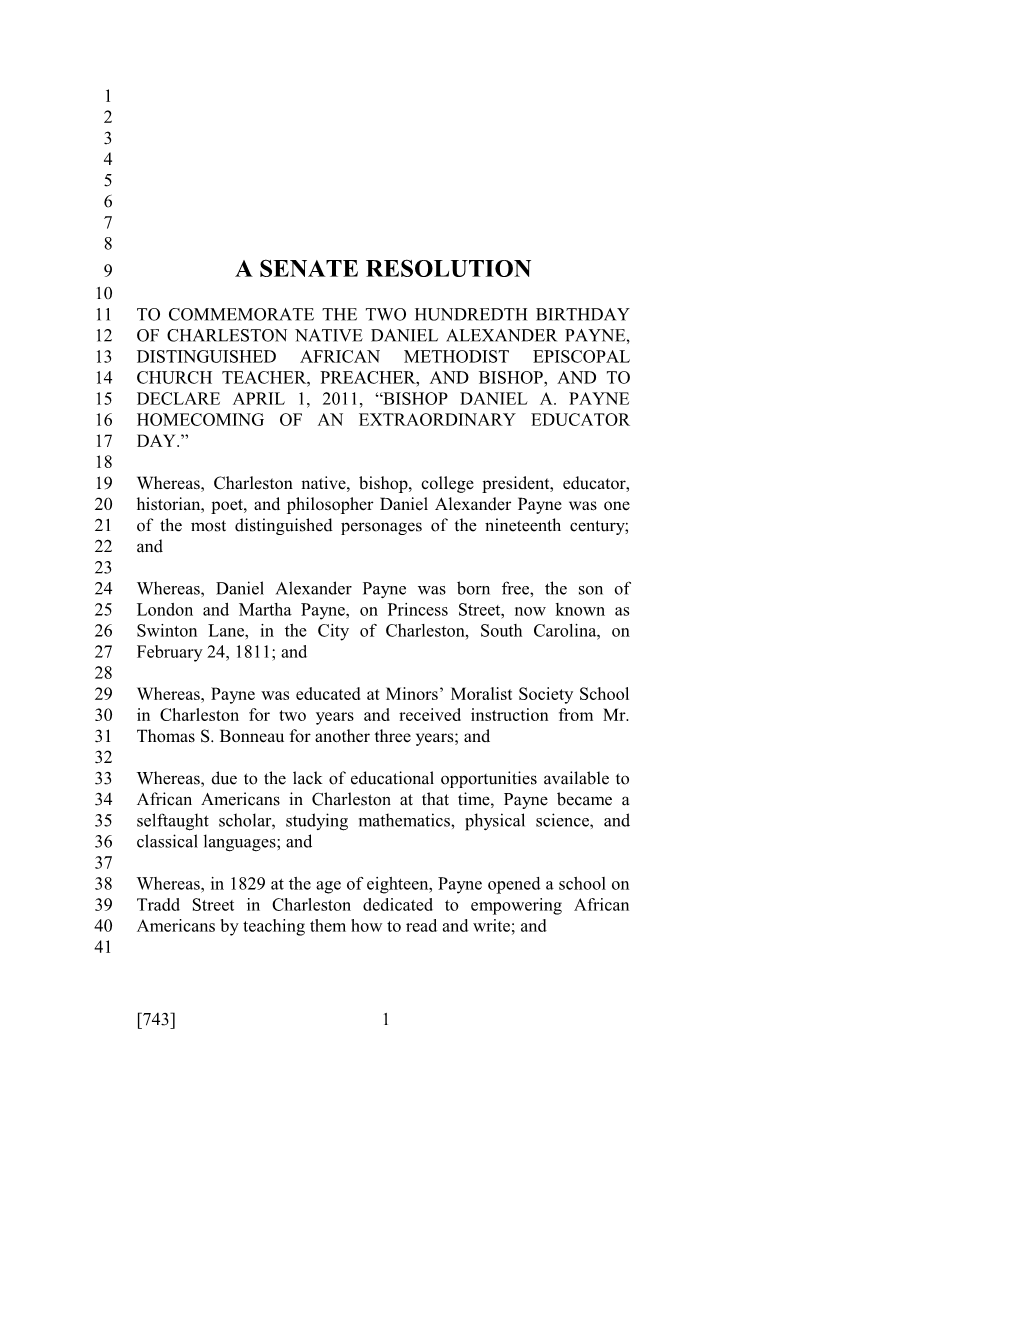 A Senate Resolution s13